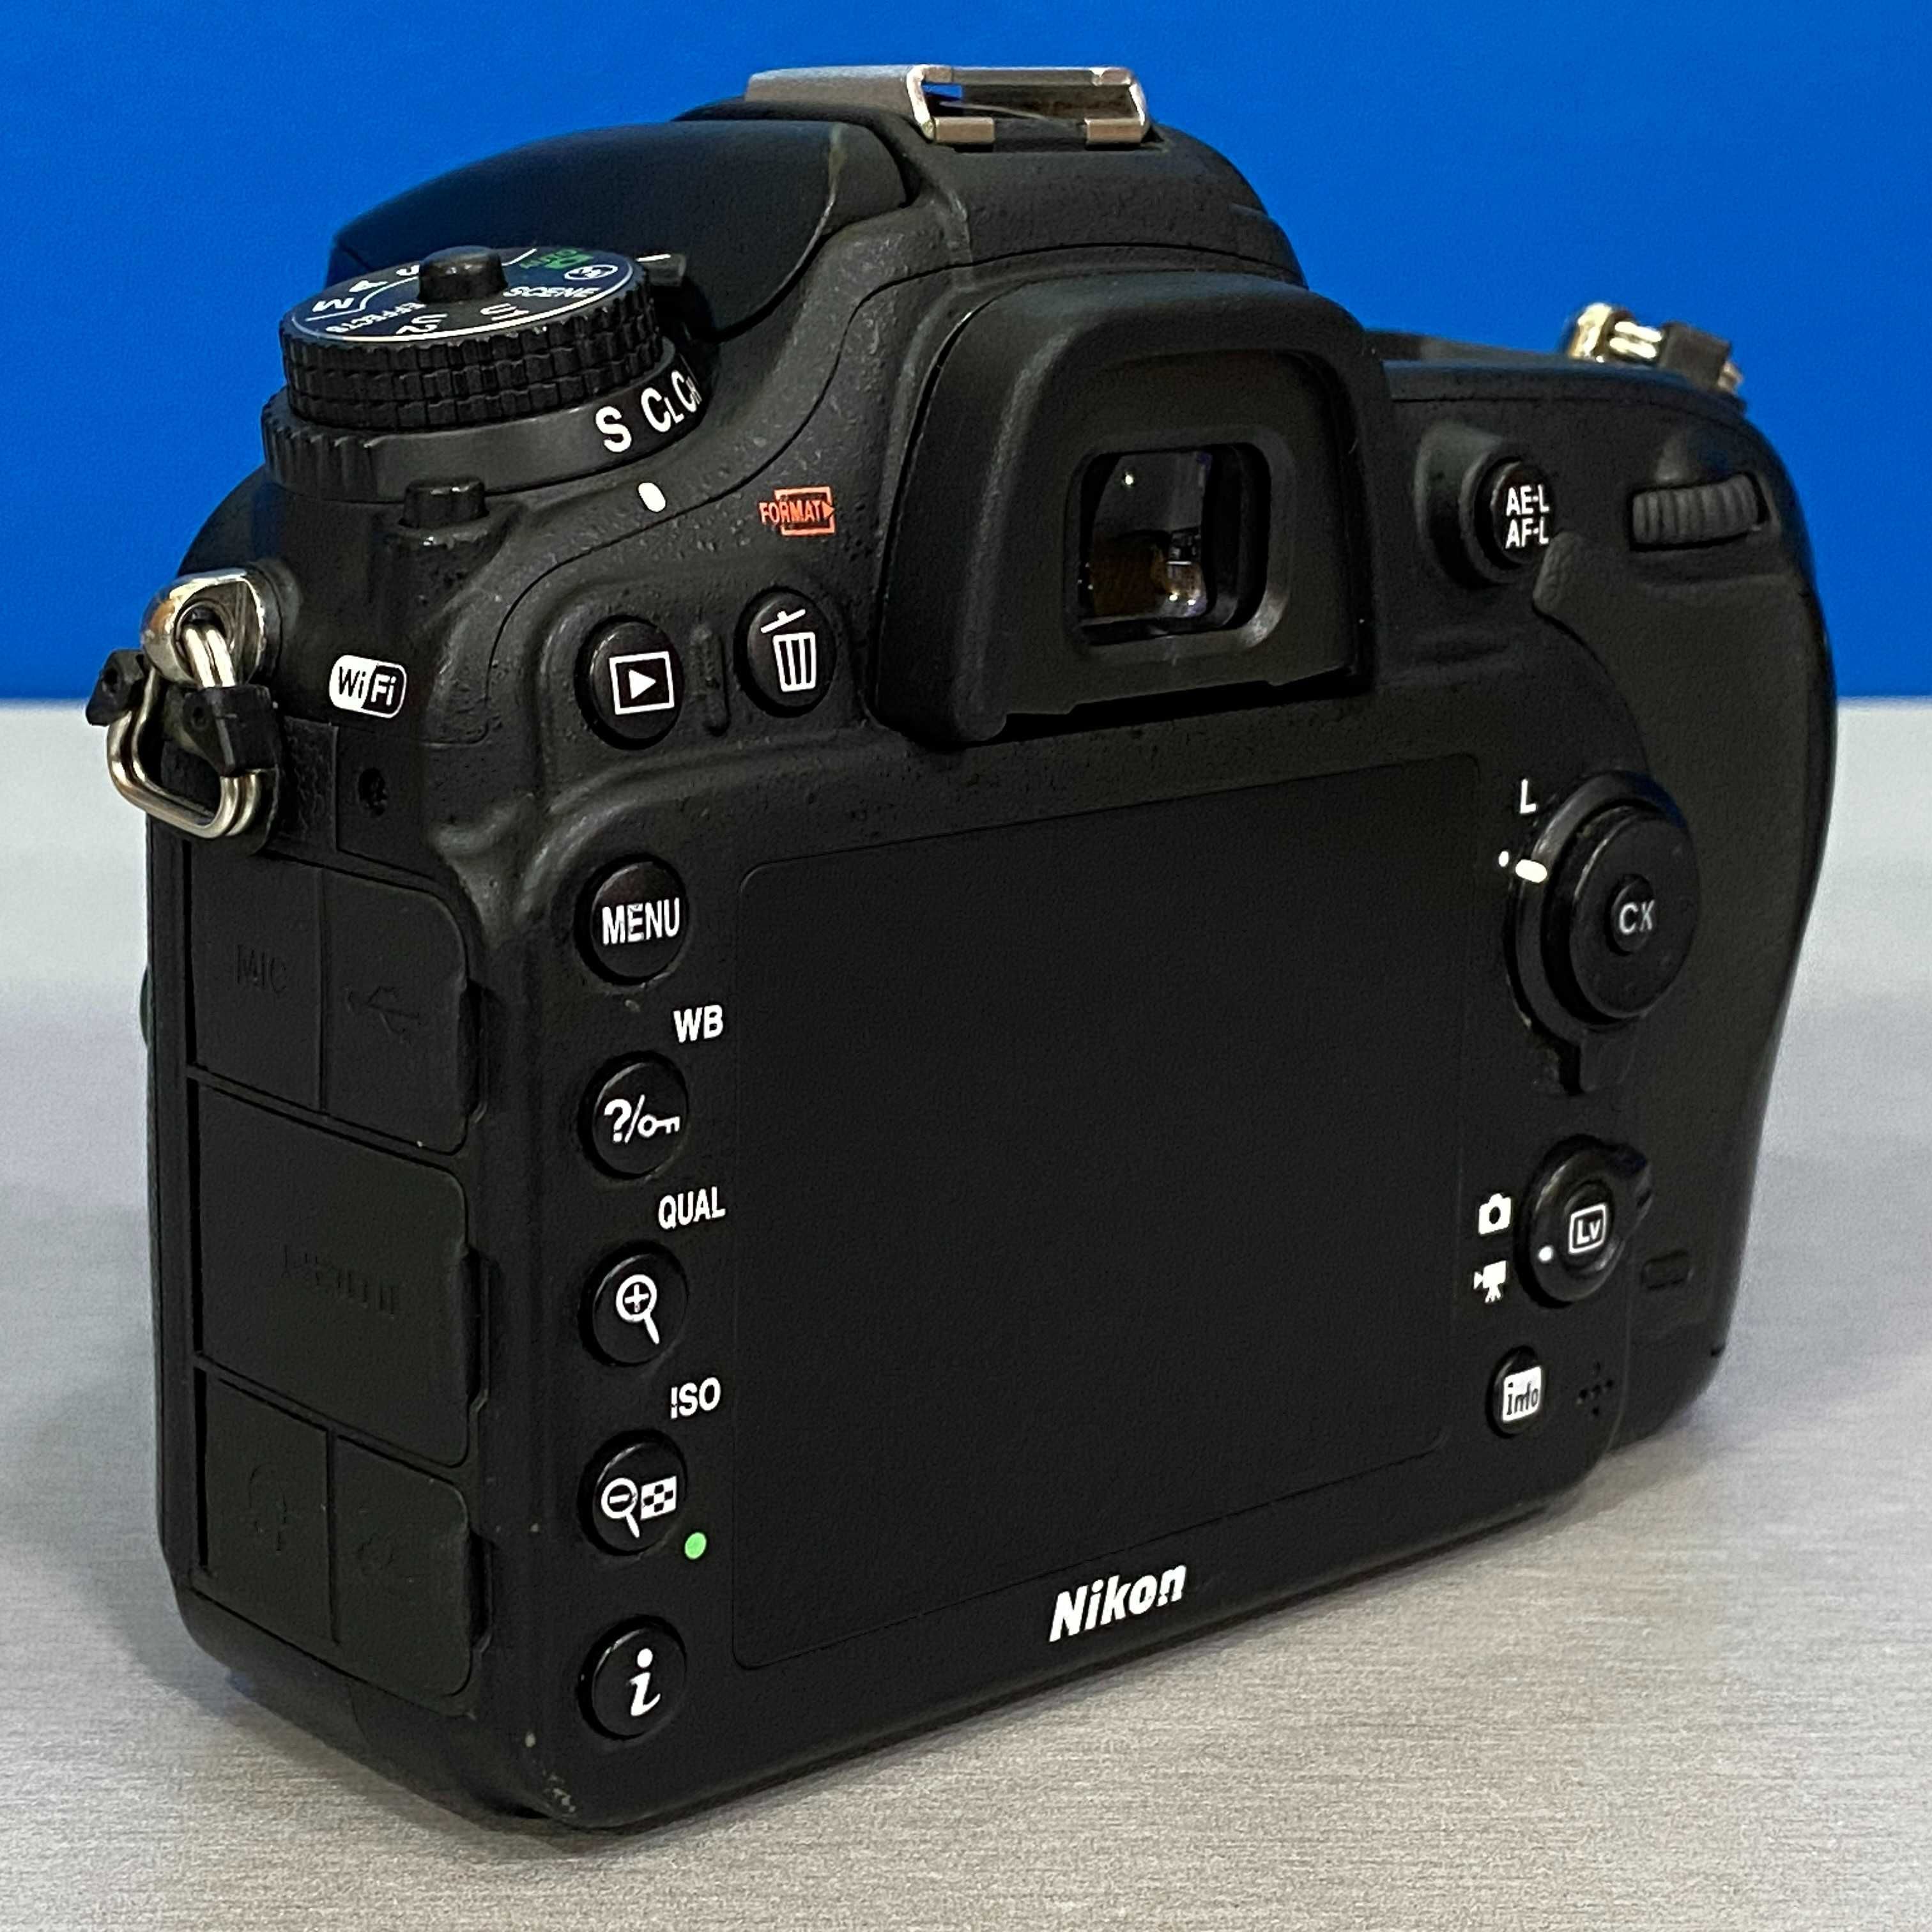 Nikon D7200 (Corpo) - 24.2MP